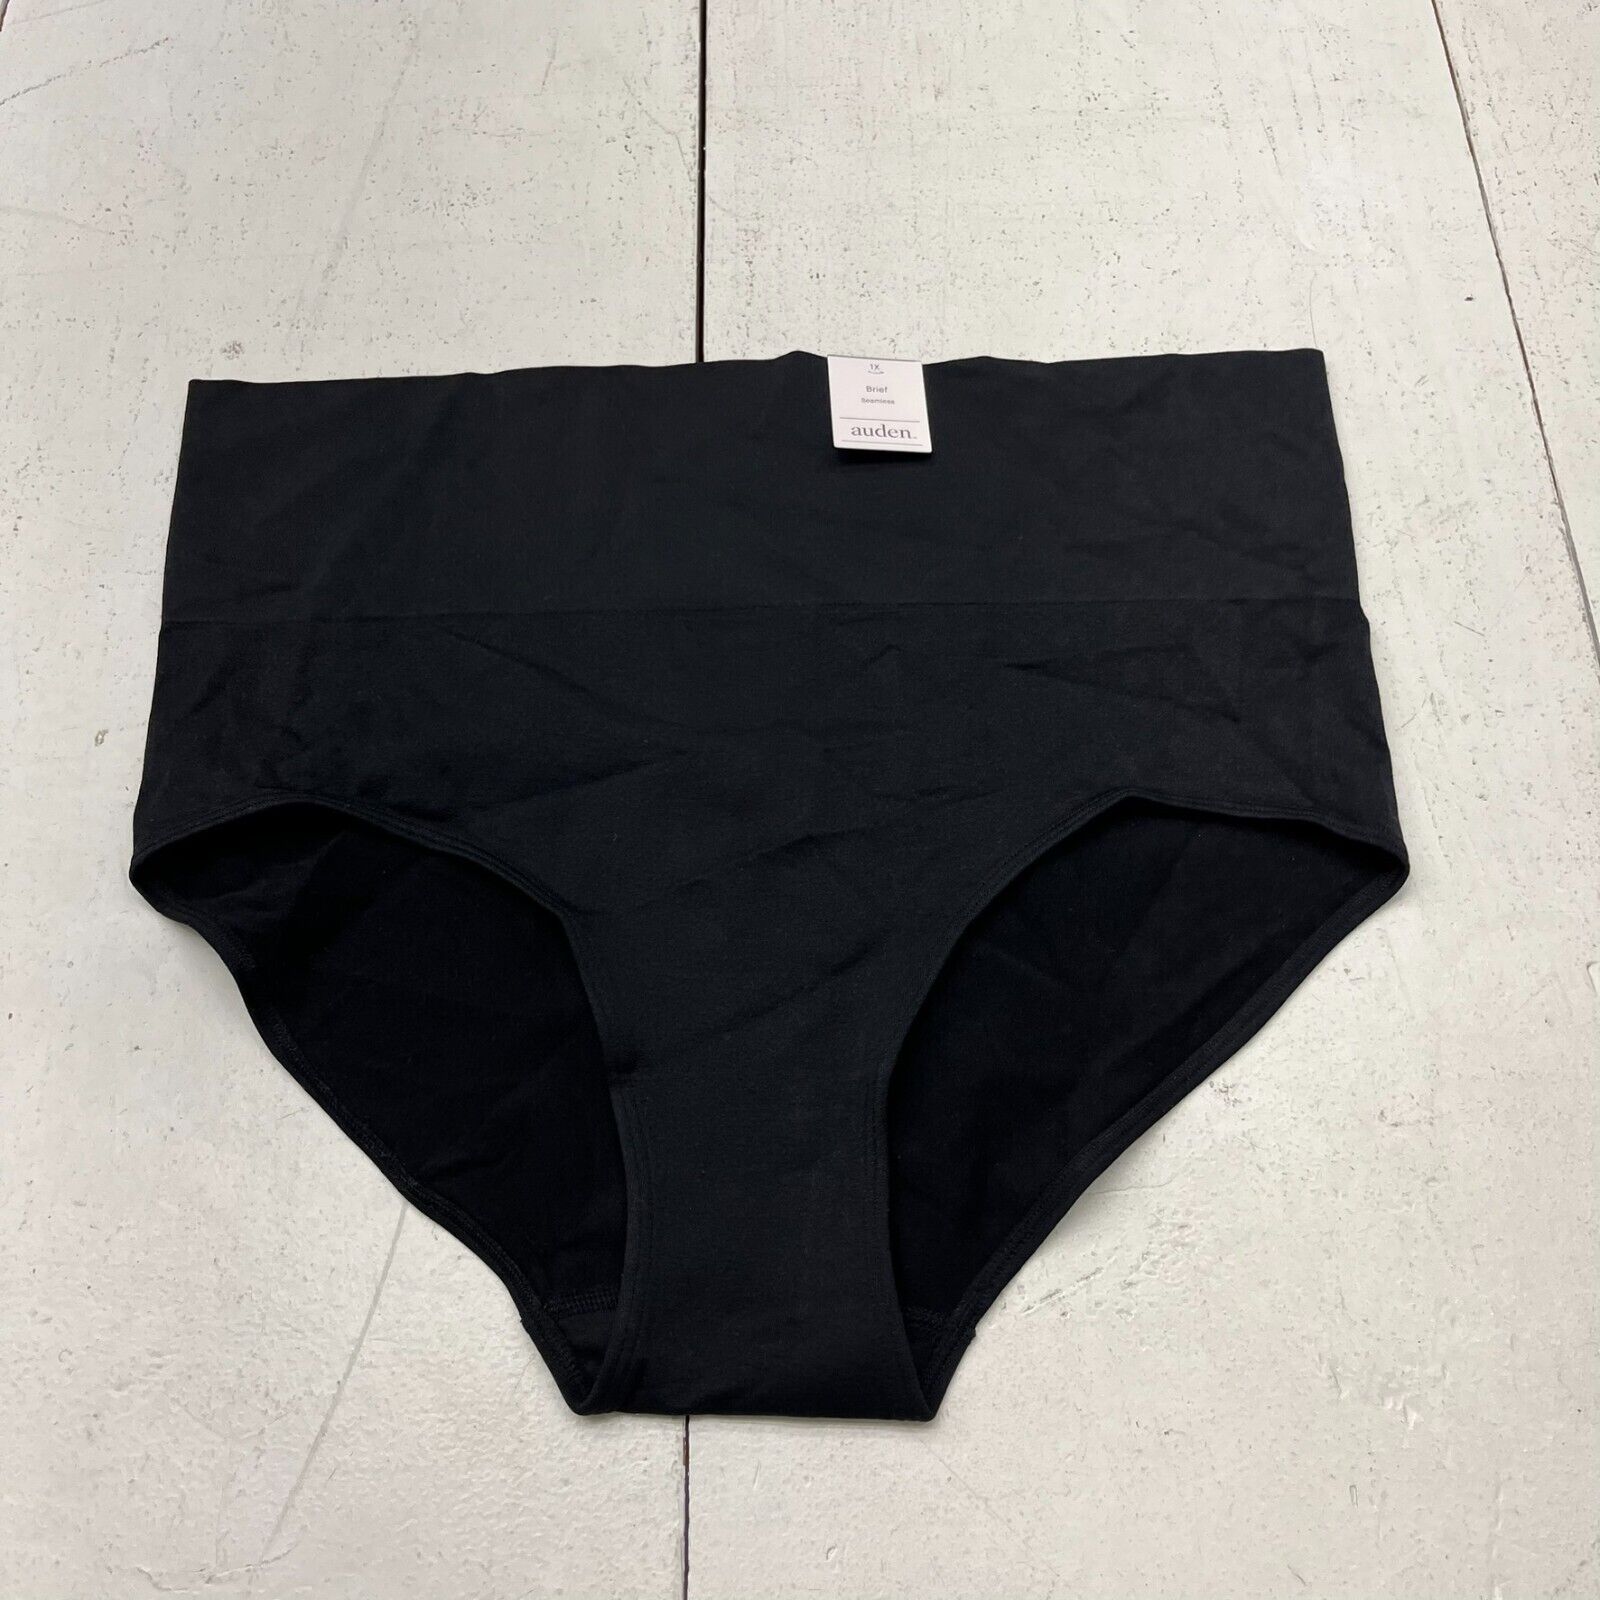 Auden Orange & Black Bikini Underwear Women's Size Medium (8-10